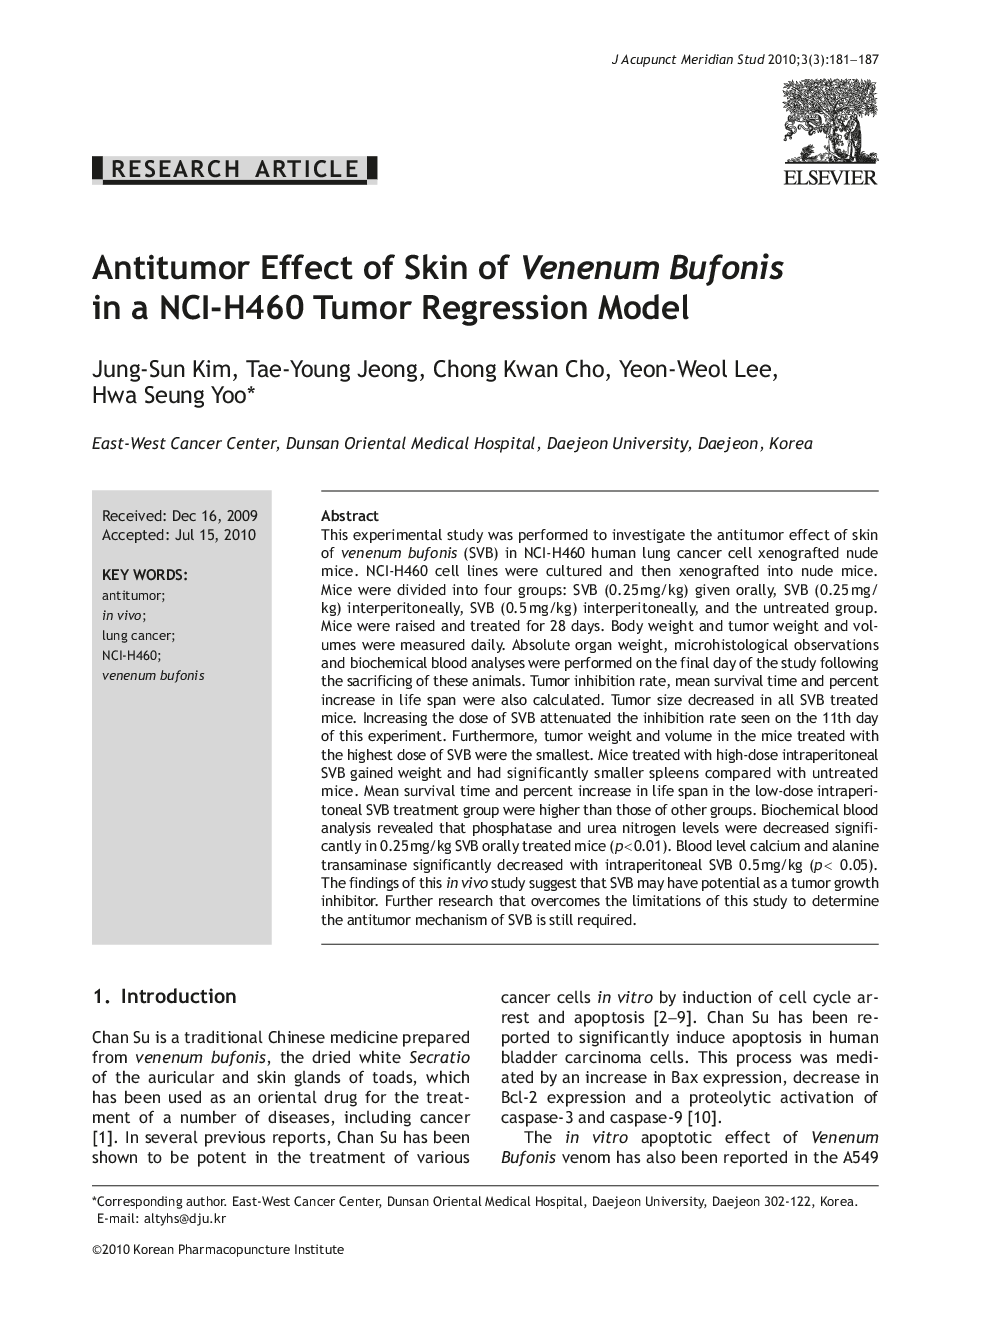 Antitumor Effect of Skin of Venenum Bufonis in a NCI-H460 Tumor Regression Model